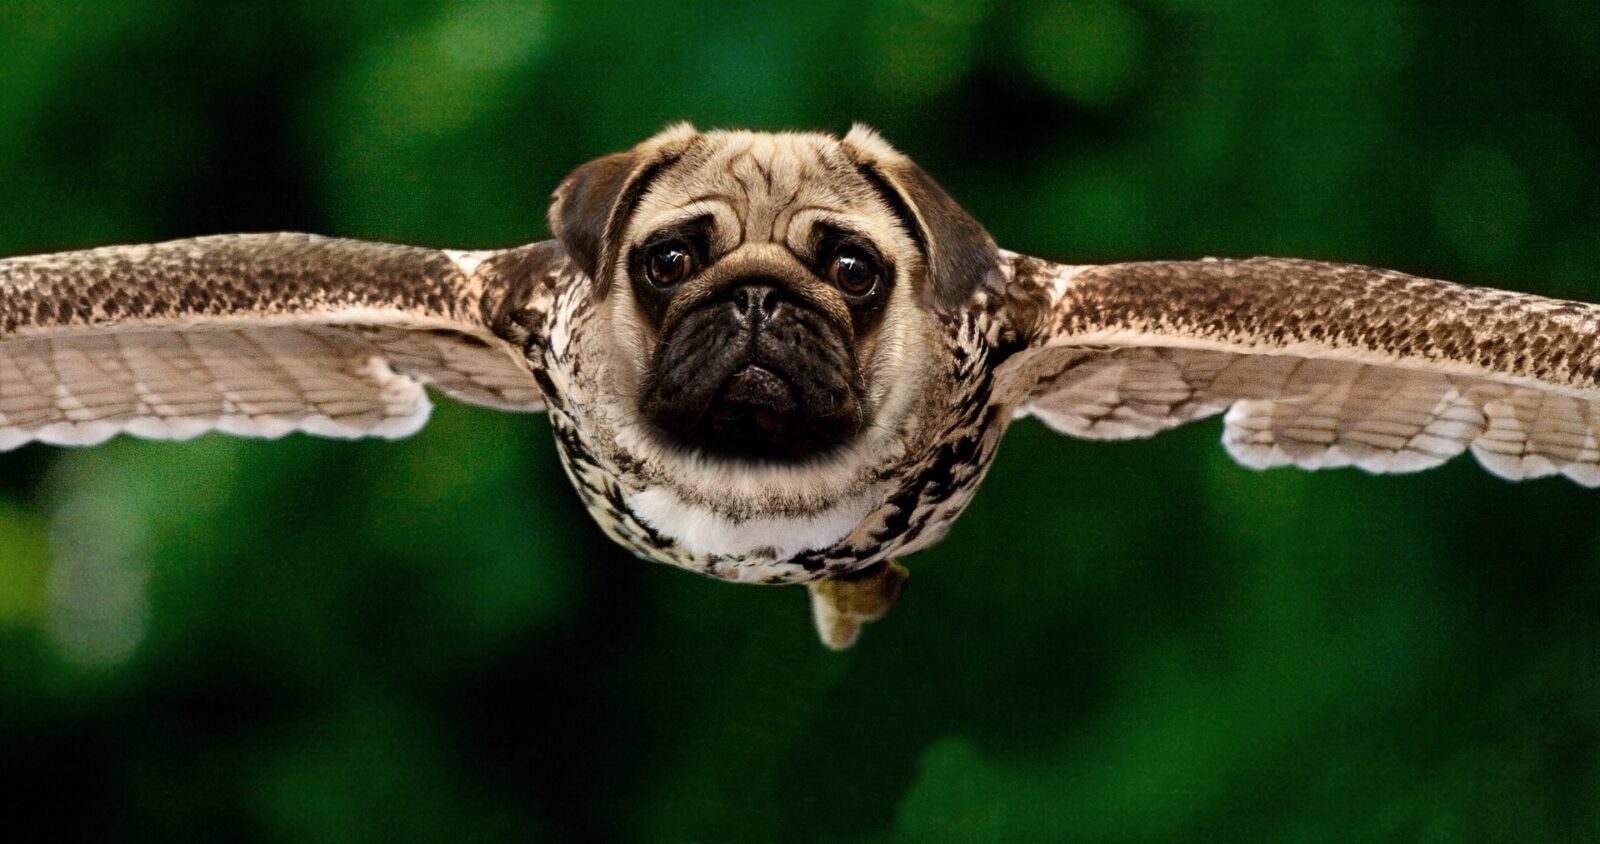 flying bird with pug dog face